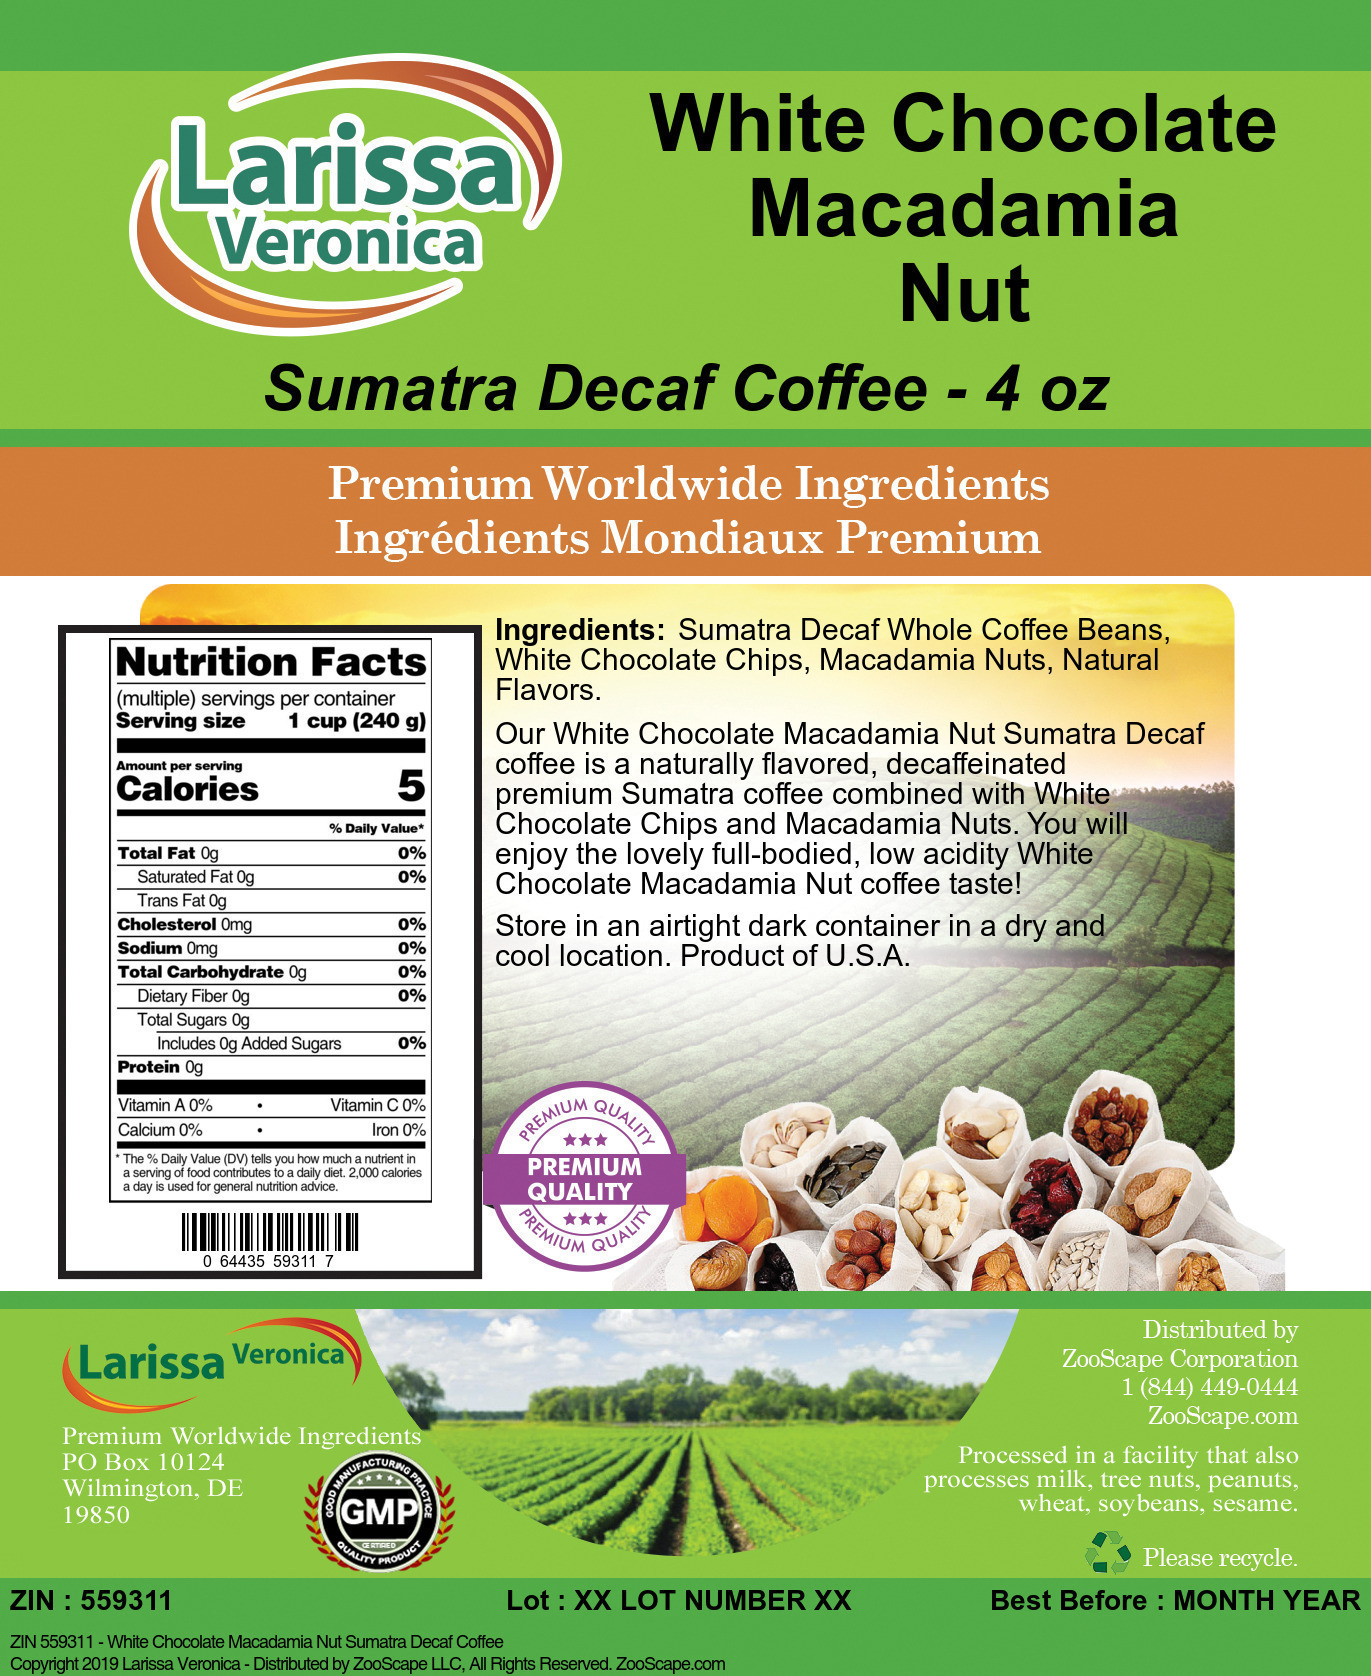 White Chocolate Macadamia Nut Sumatra Decaf Coffee - Label